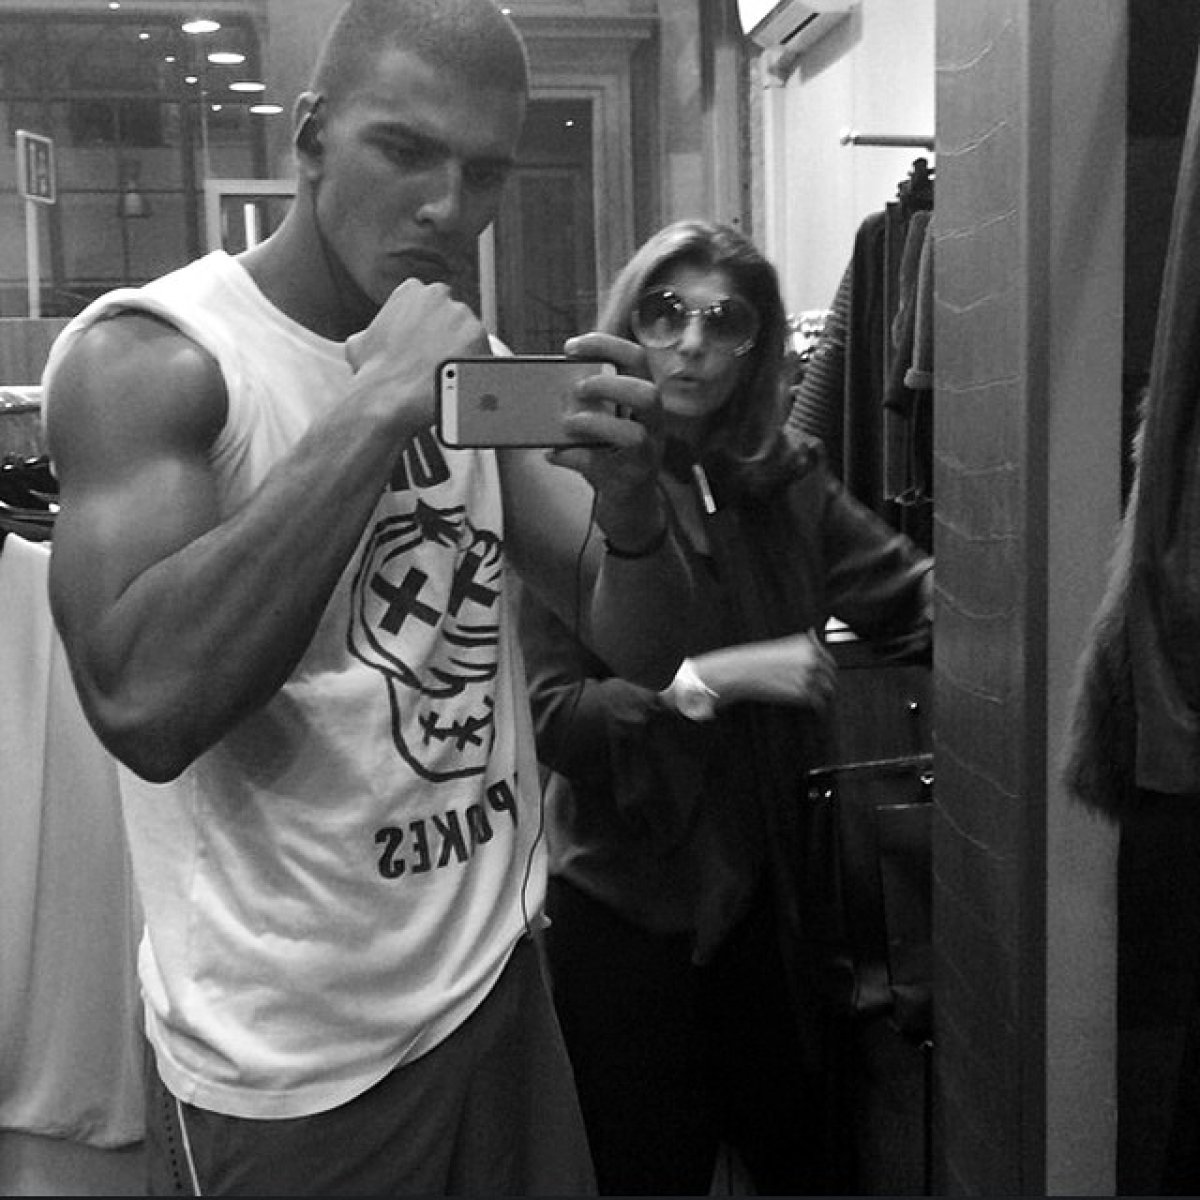 Así es Younes Bendjima, el nuevo novio boxeador y modelo de Kourtney Kardashian